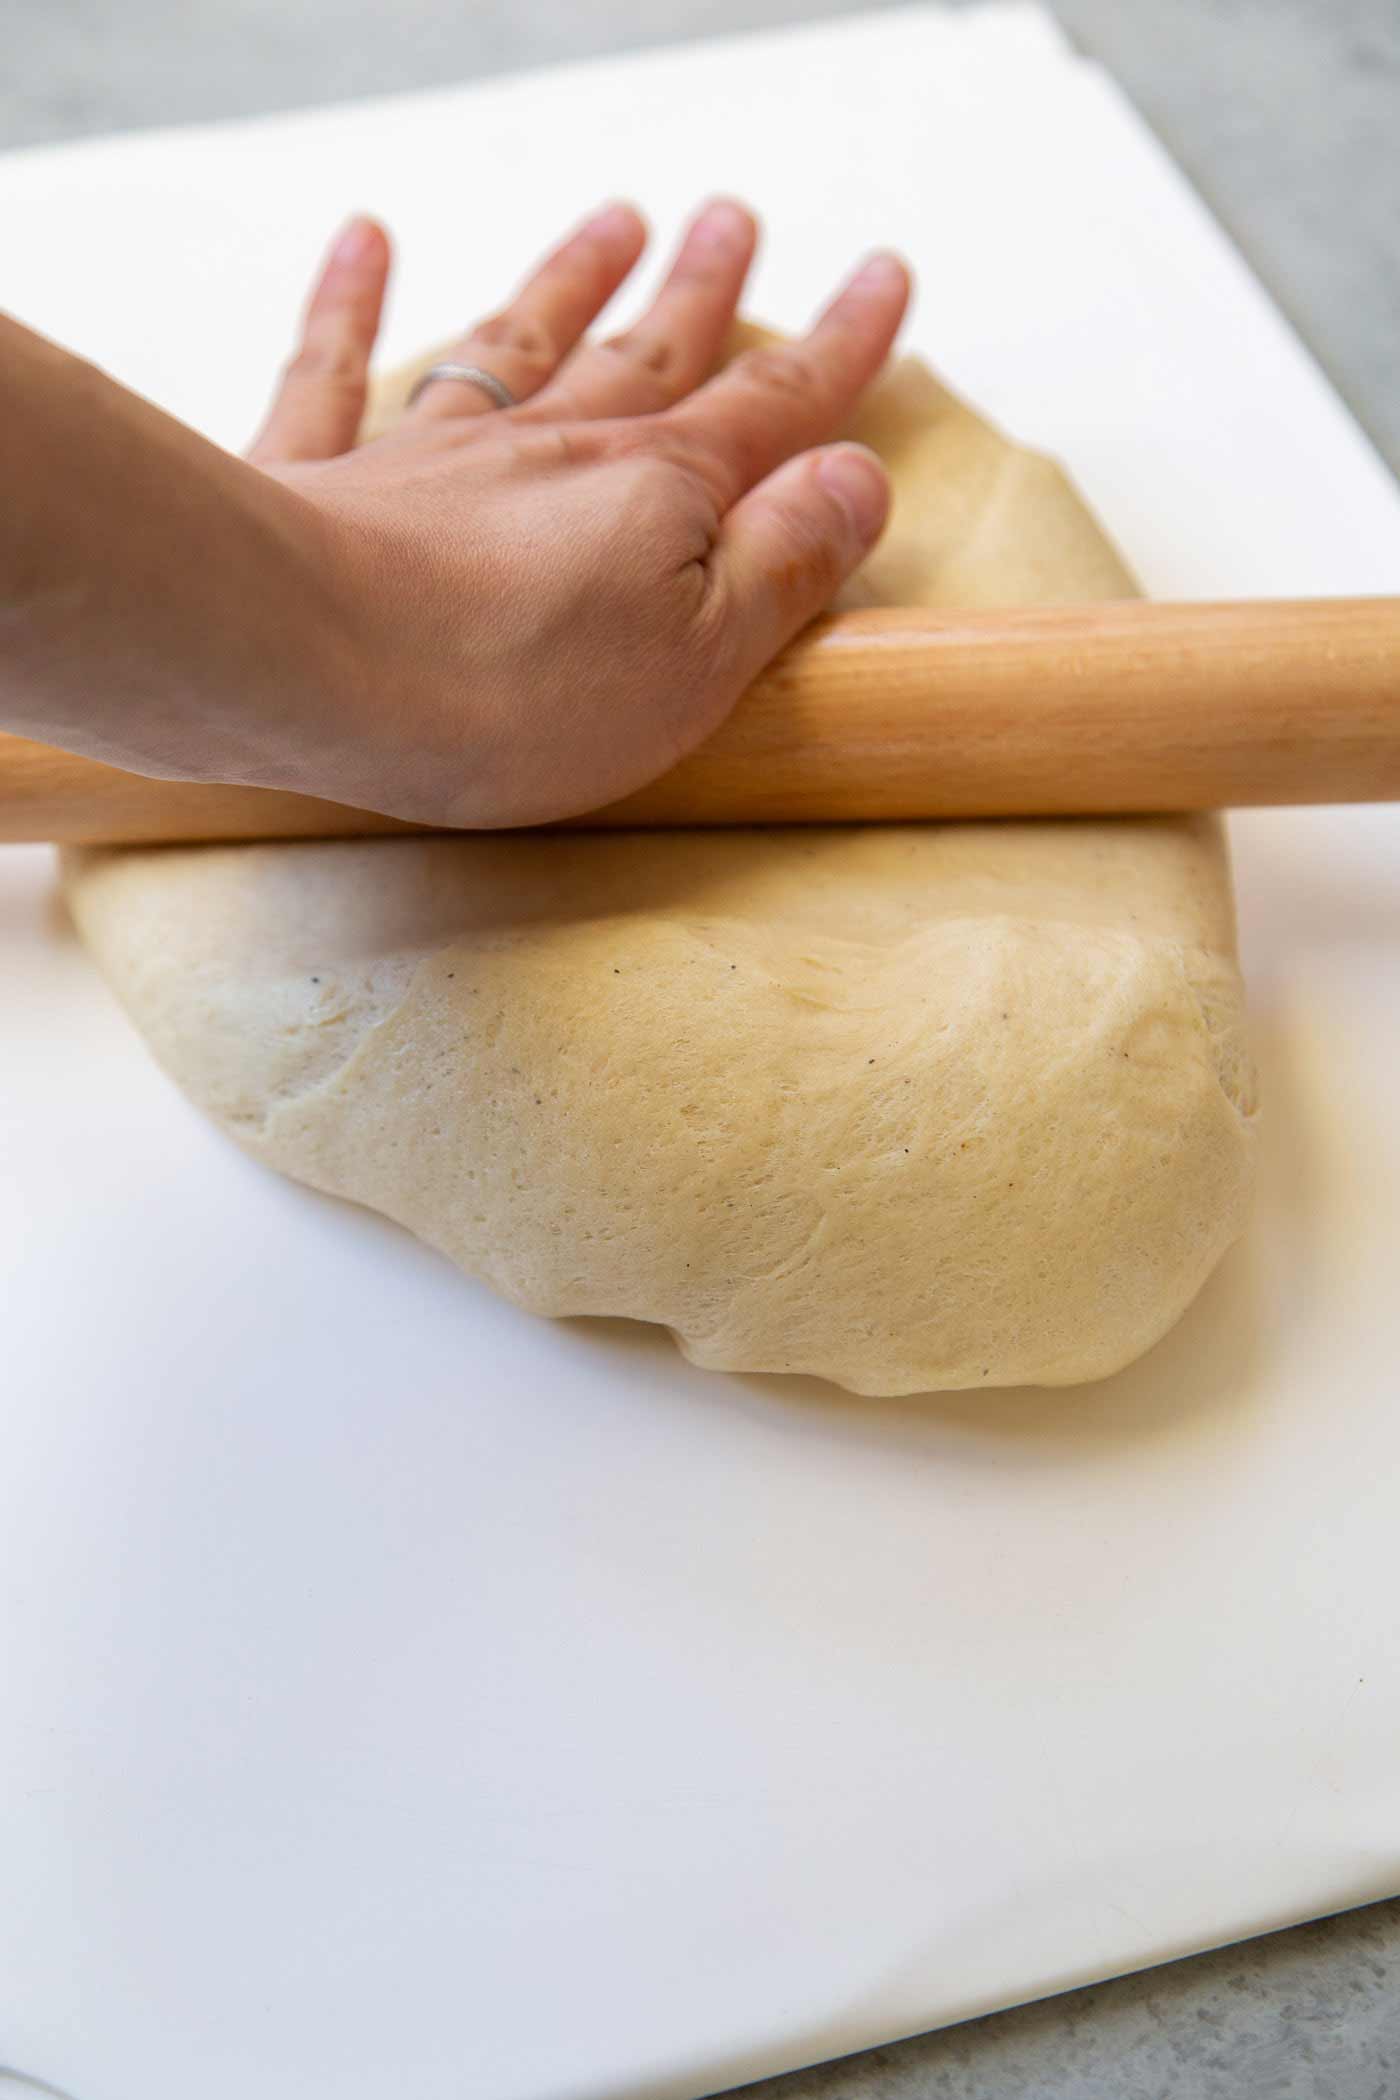 eggnog yeasted dough for cinnamon rolls